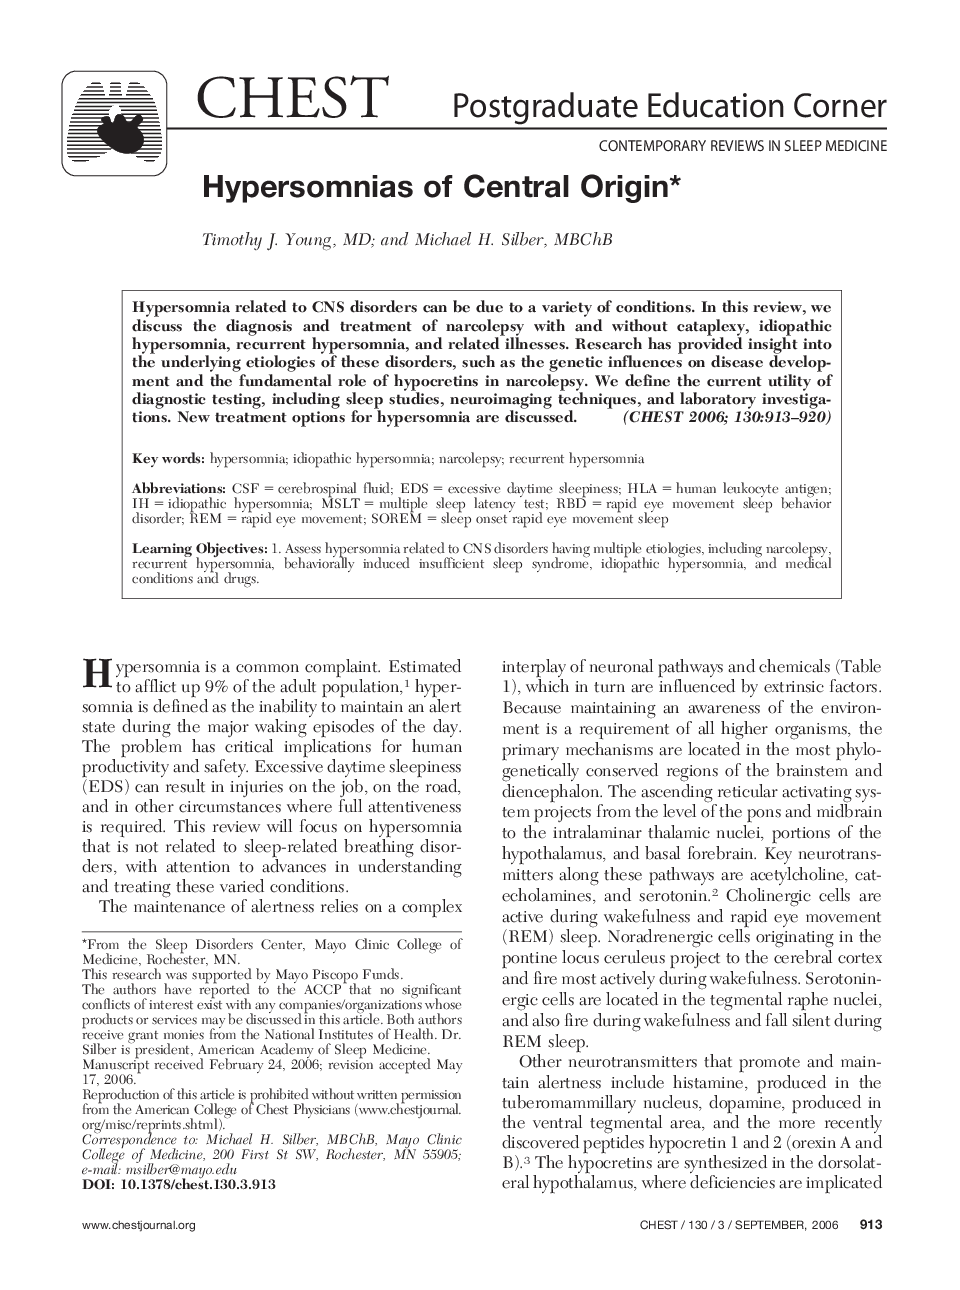 Hypersomnias of Central Origin